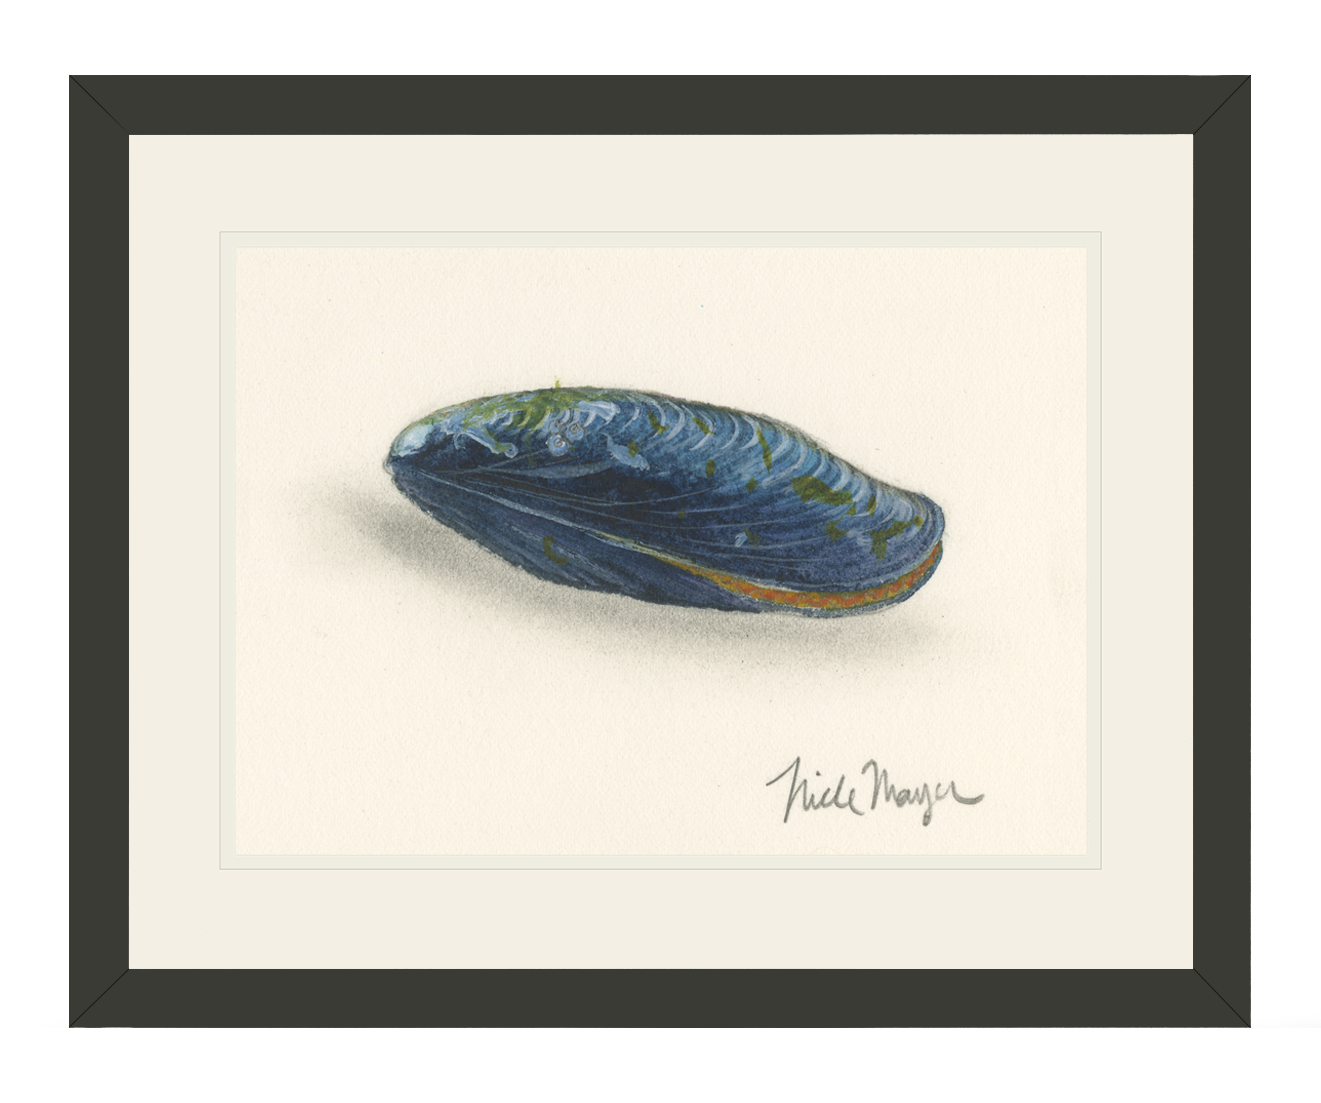 Blue Mussel Print